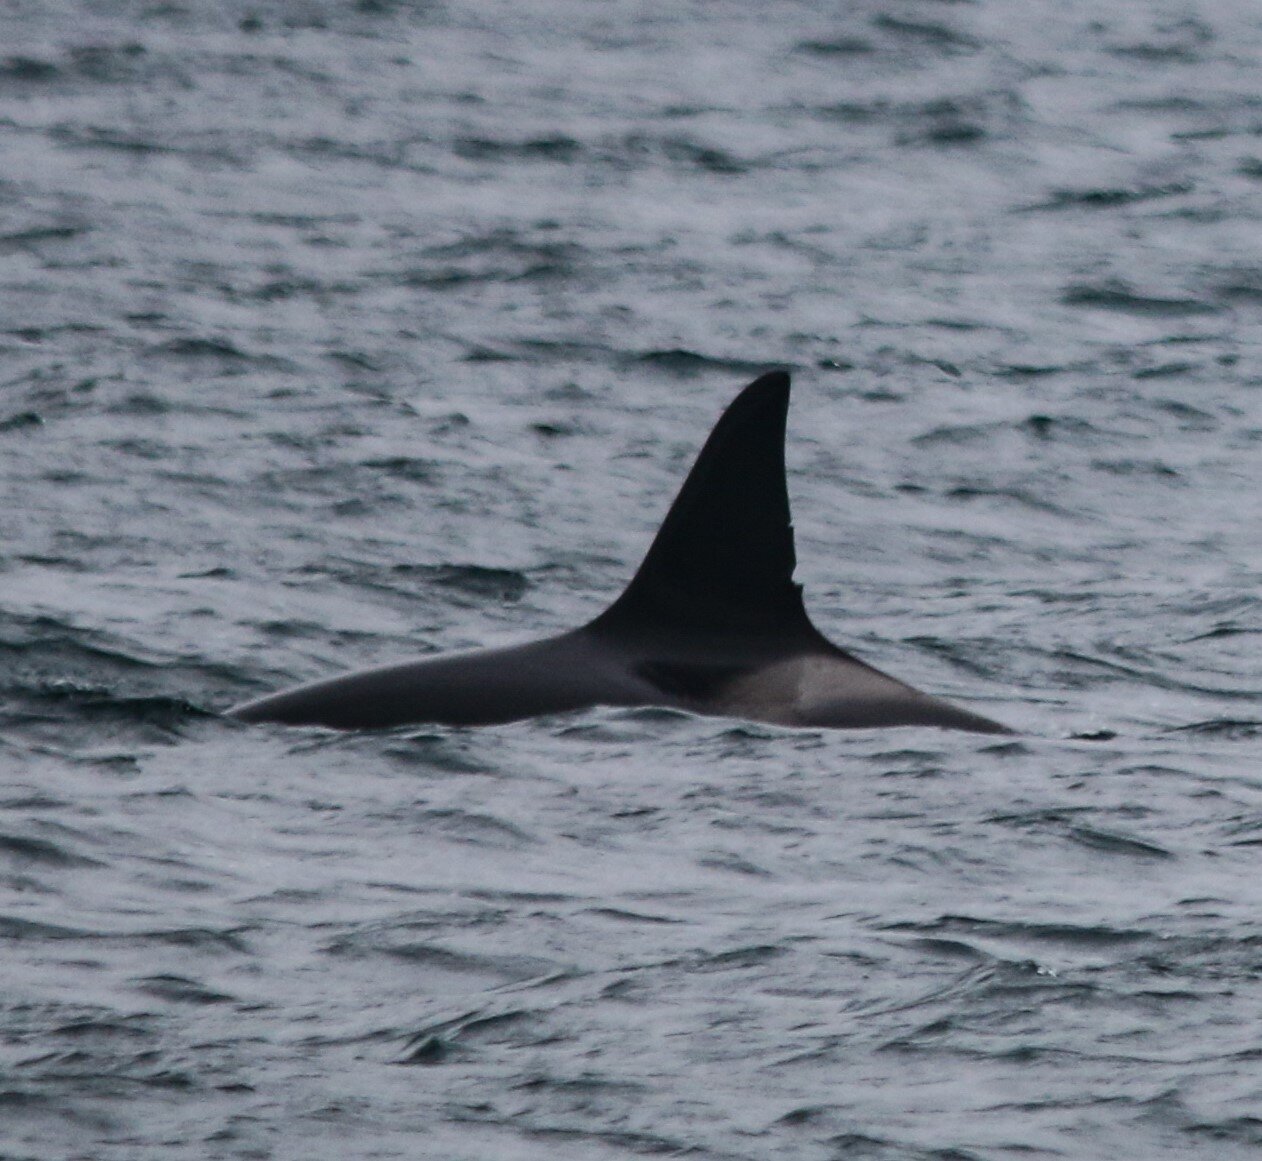 Scotland Norway Killer Whale Match 6.jpg